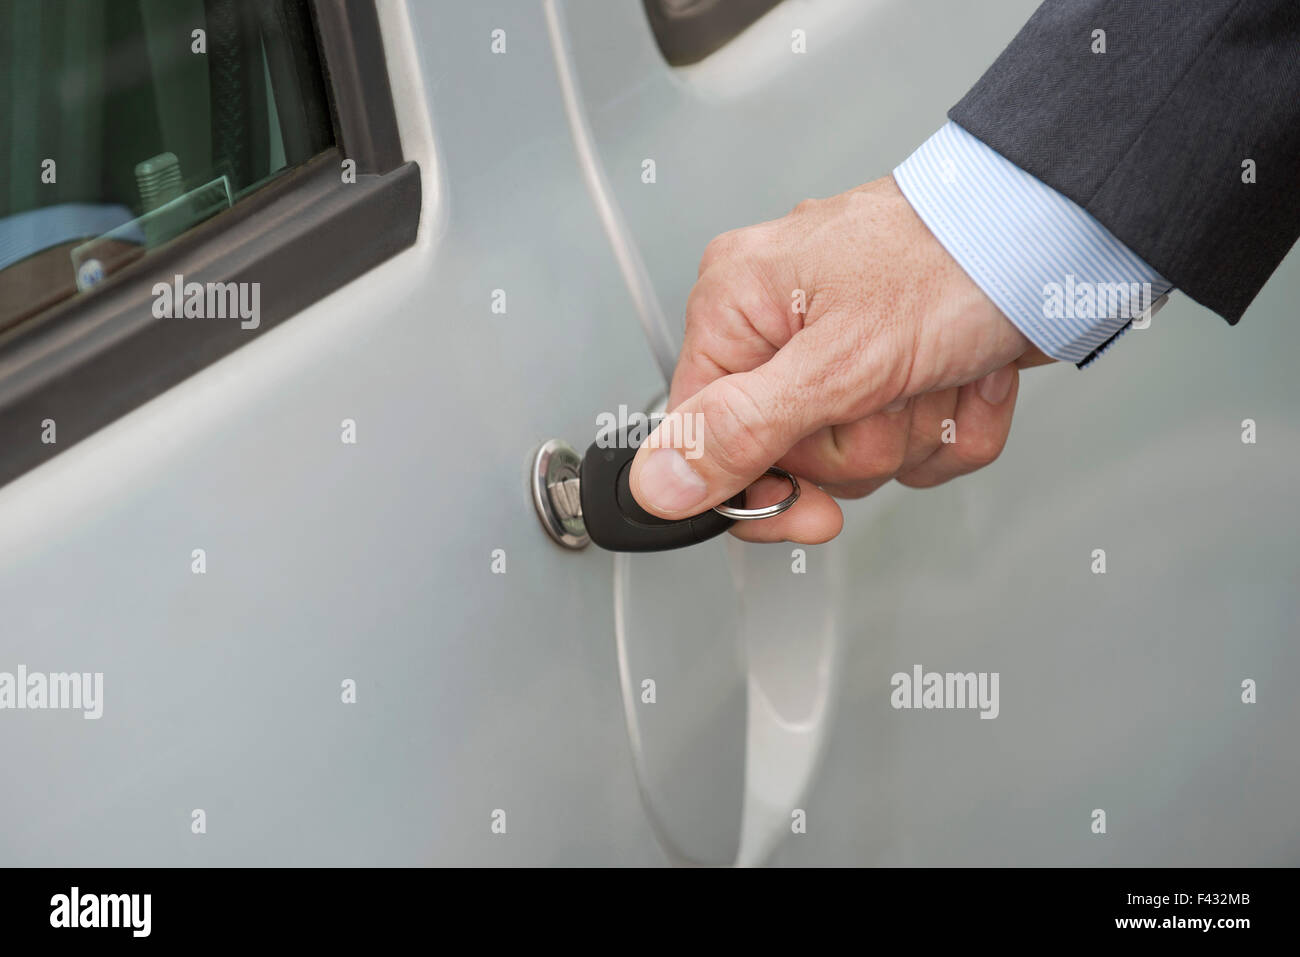 Man unlocking car door with key, cropped Stock Photo